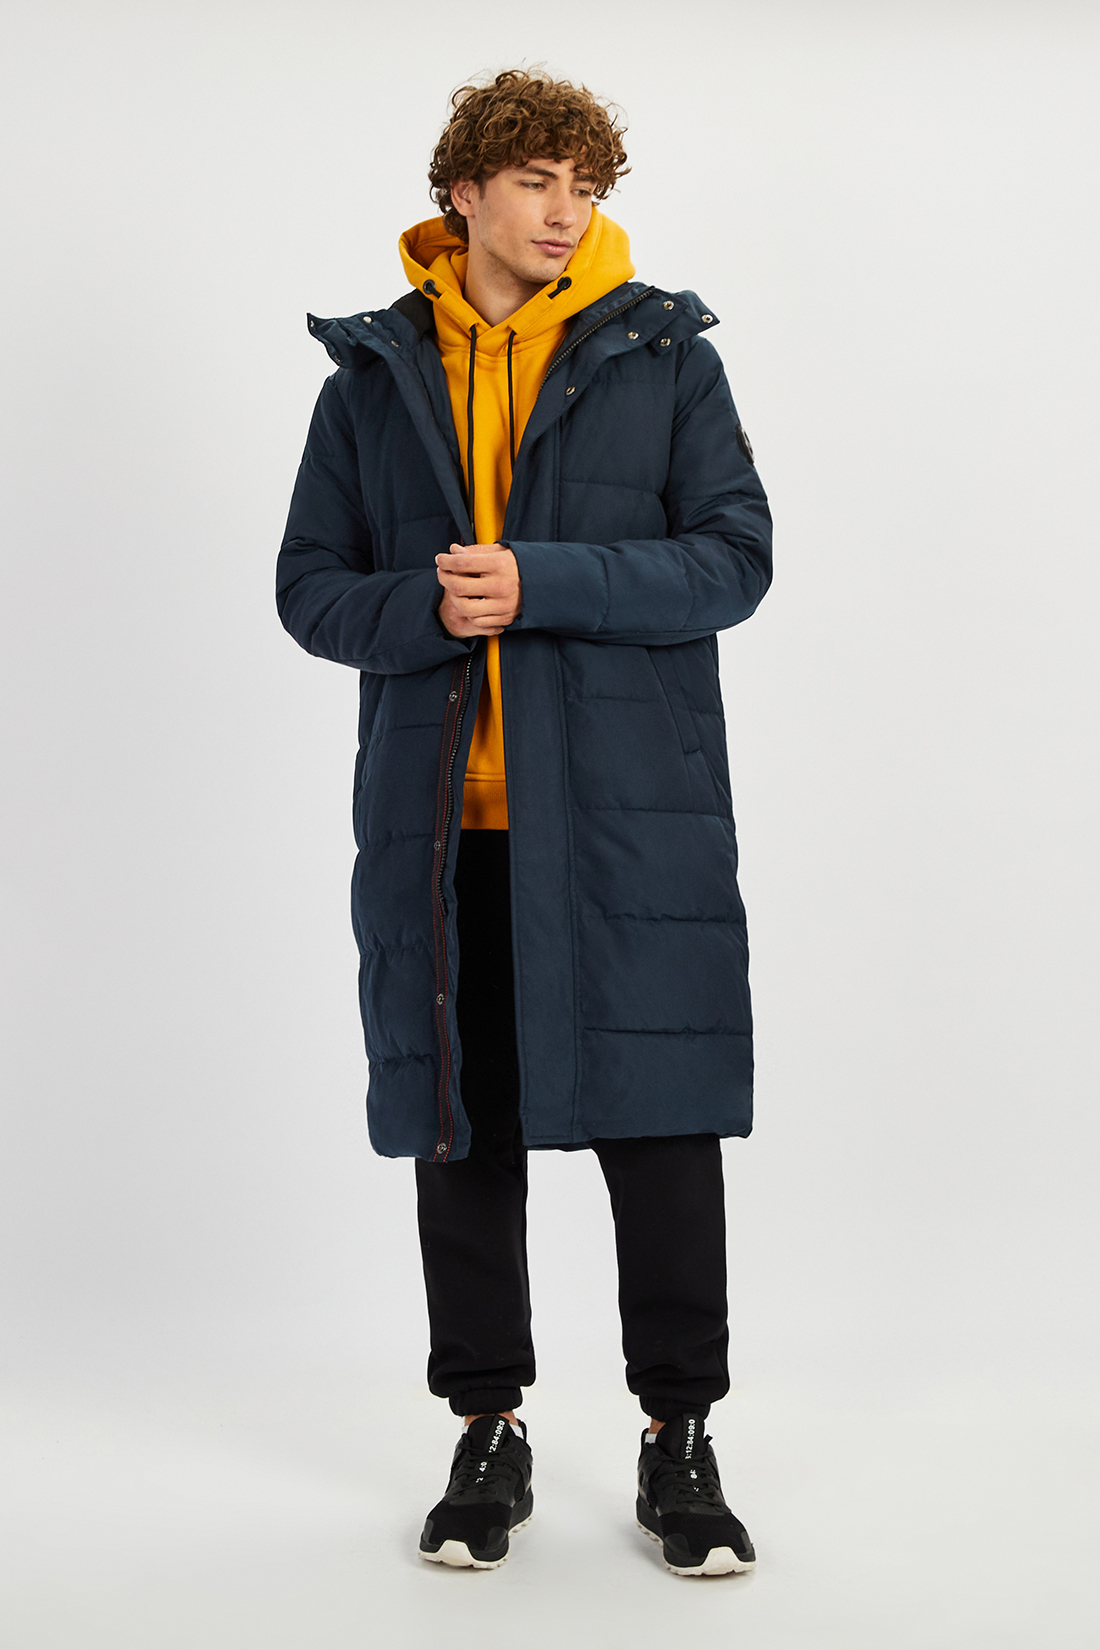 Длинная куртка (эко пух) (арт. baon B541506), размер M, цвет синий Длинная куртка (эко пух) (арт. baon B541506) - фото 7